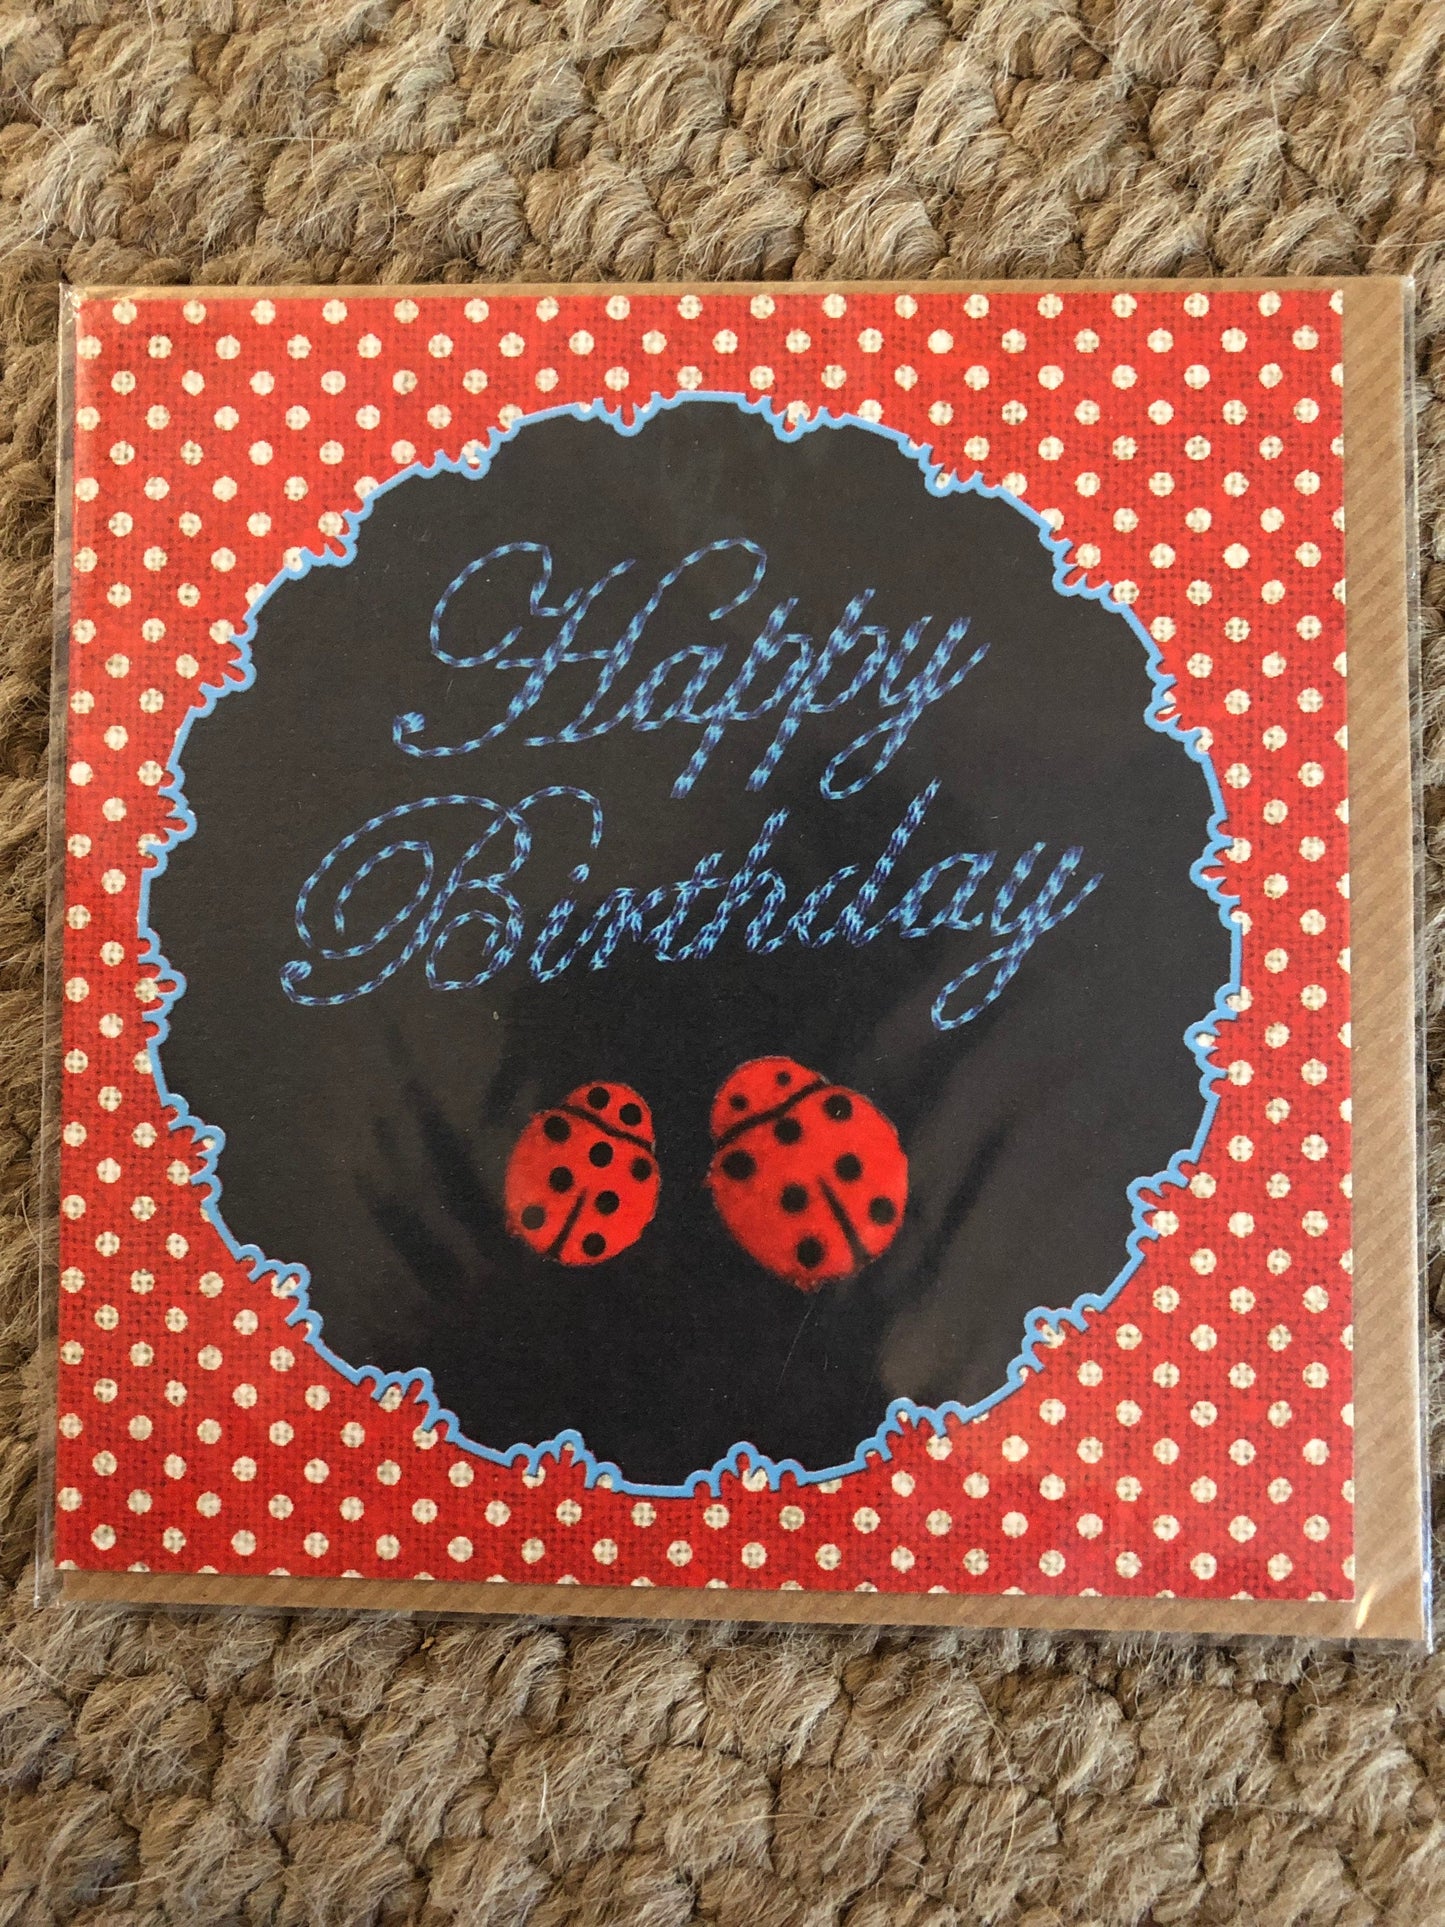 Vintage retro kitsch happy birthday card 1950s 1960s cute sewn ladybirds